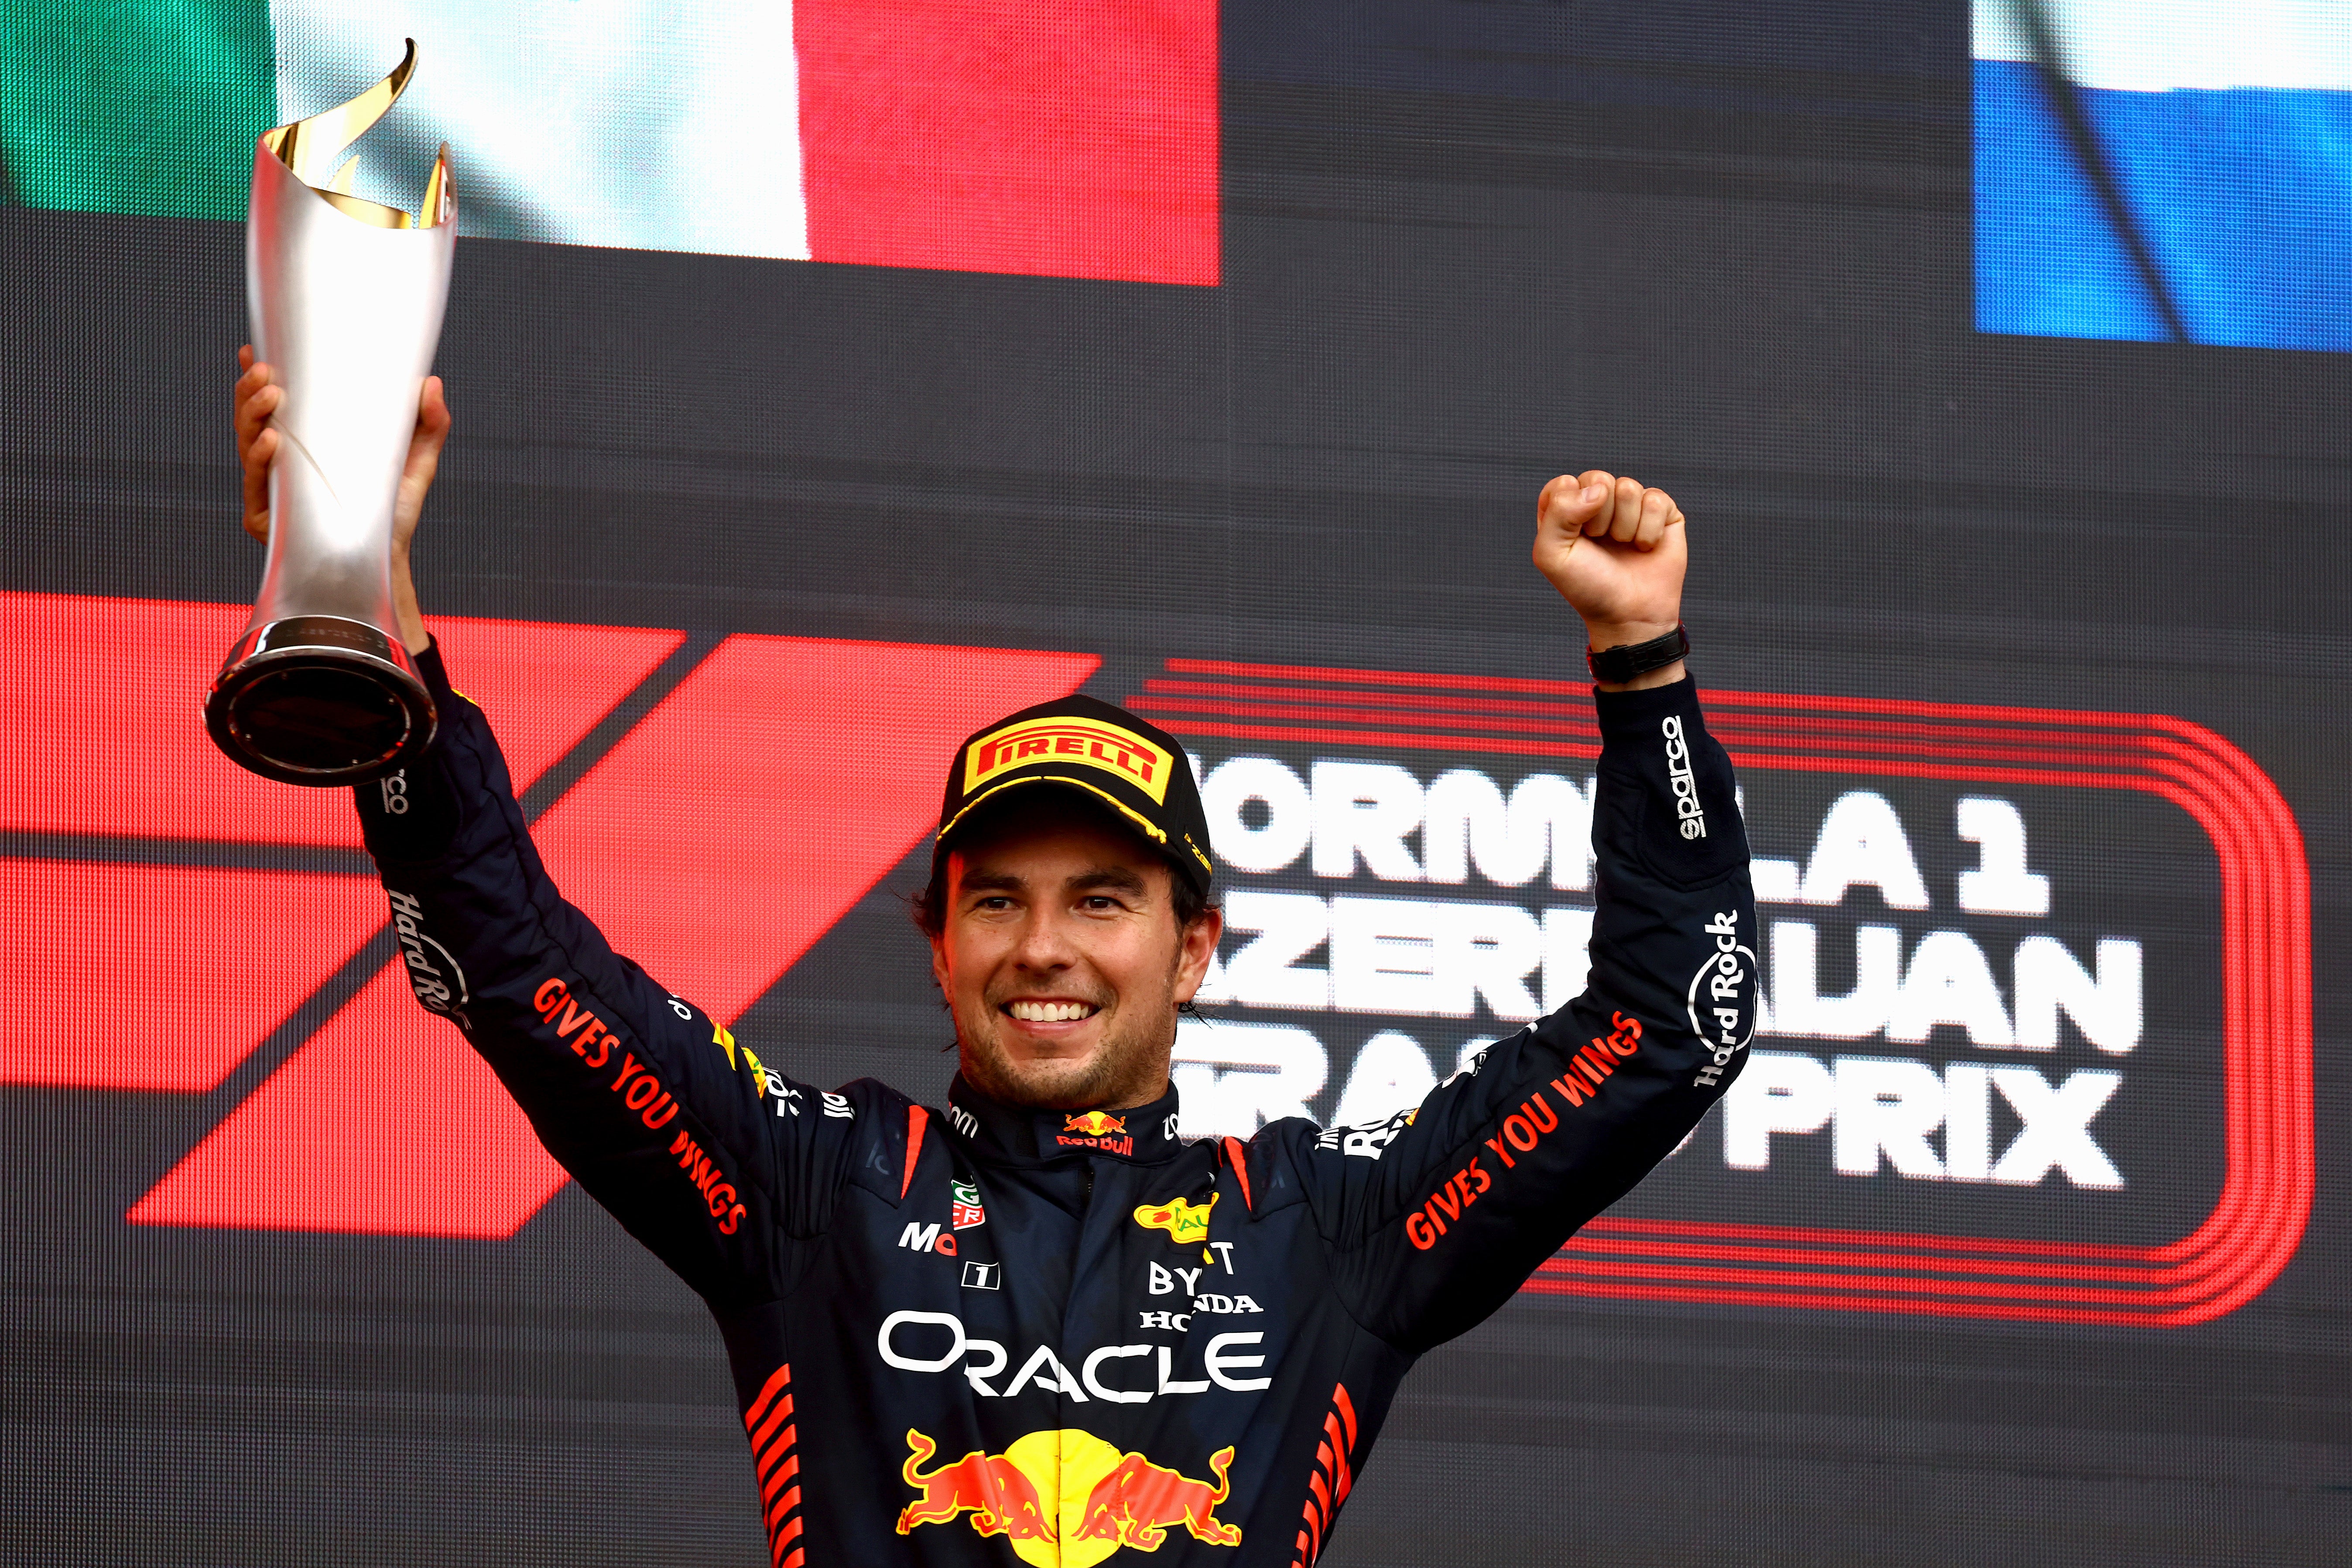 Sergio Perez won the Azerbaijan Grand Prix with an impressive drive